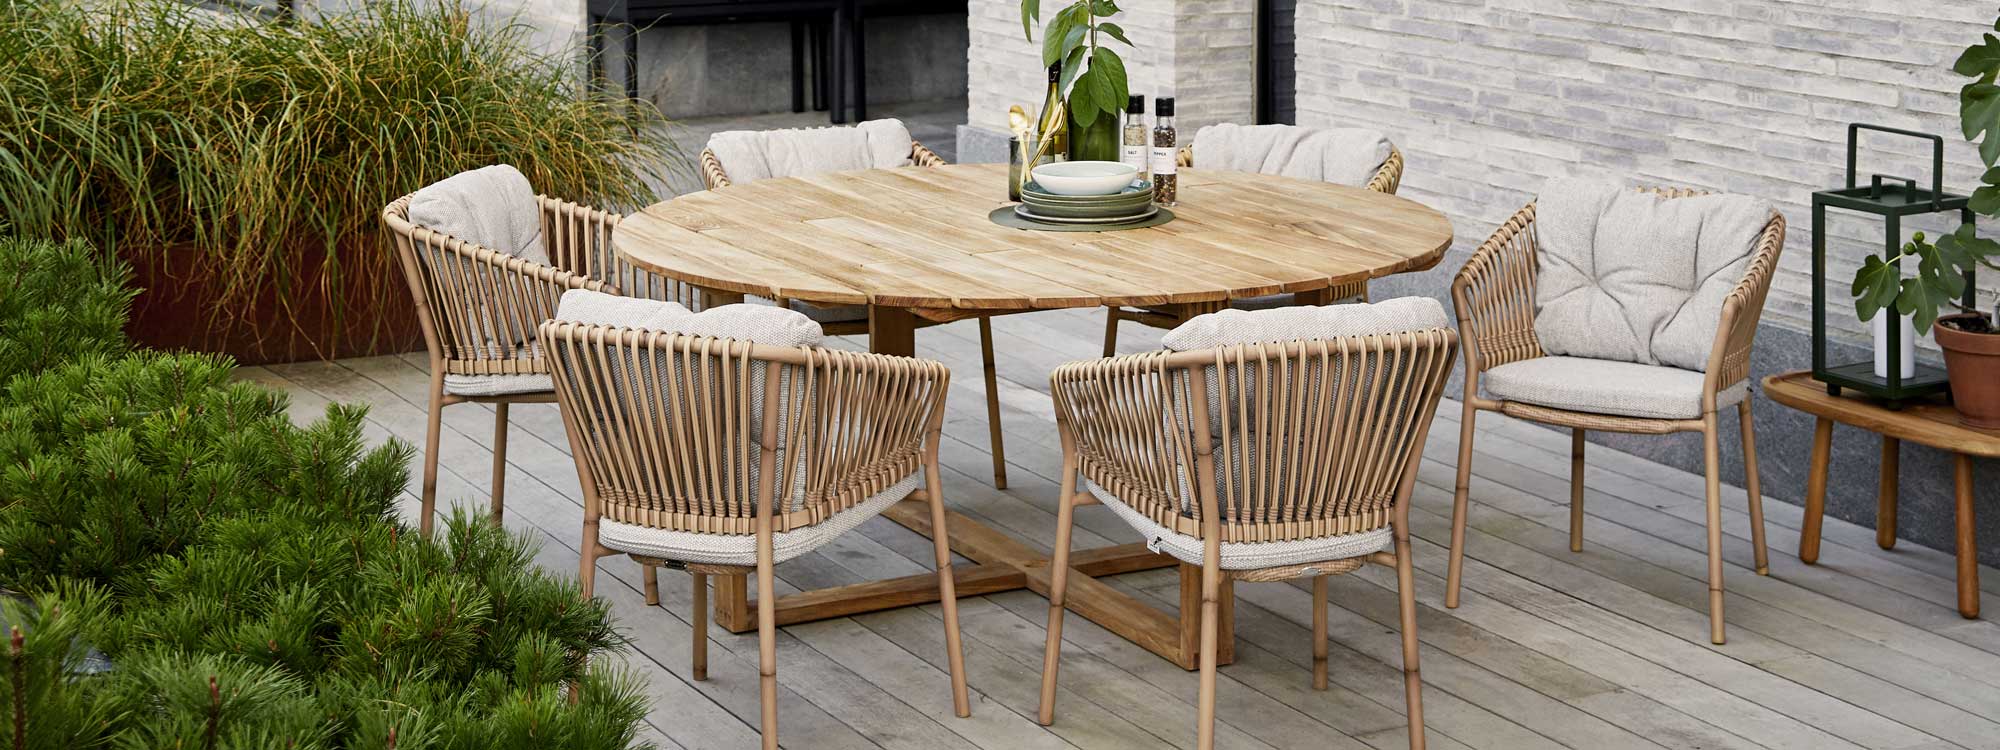 Endless Teak Table & Ocean CANE GARDEN CHAIR Is A MODERN Outdoor Chair In HIGH QUALITY Garden Furniture Materials By Cane-line RATTAN GARDEN FURNITURE - Denmark